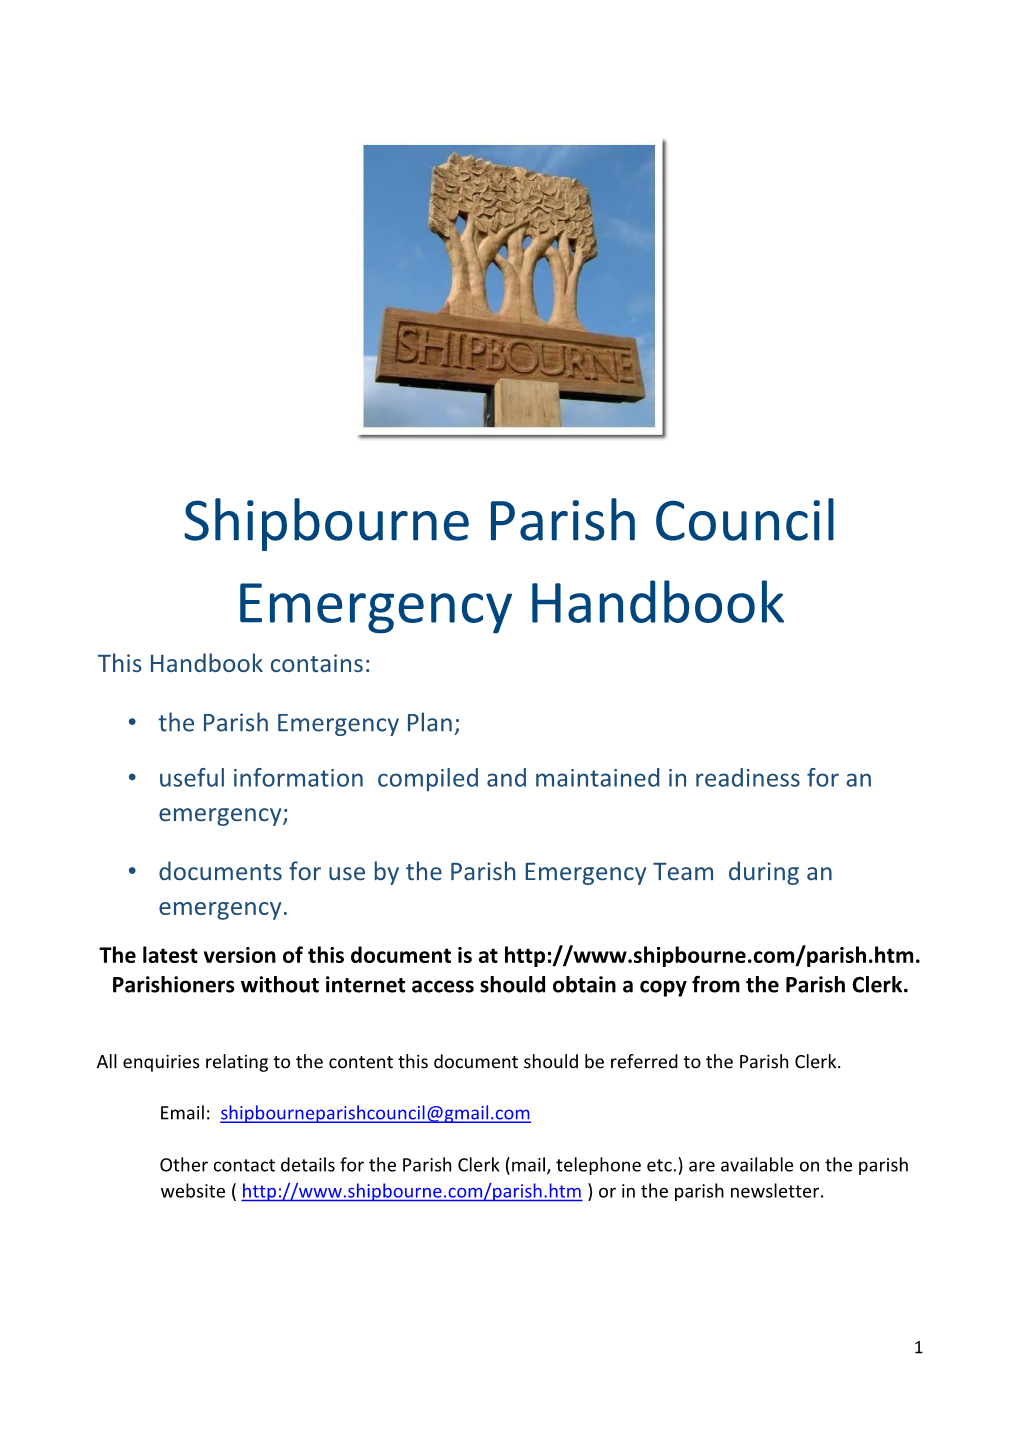 Shipbourne Emergency Handbook Web 2020